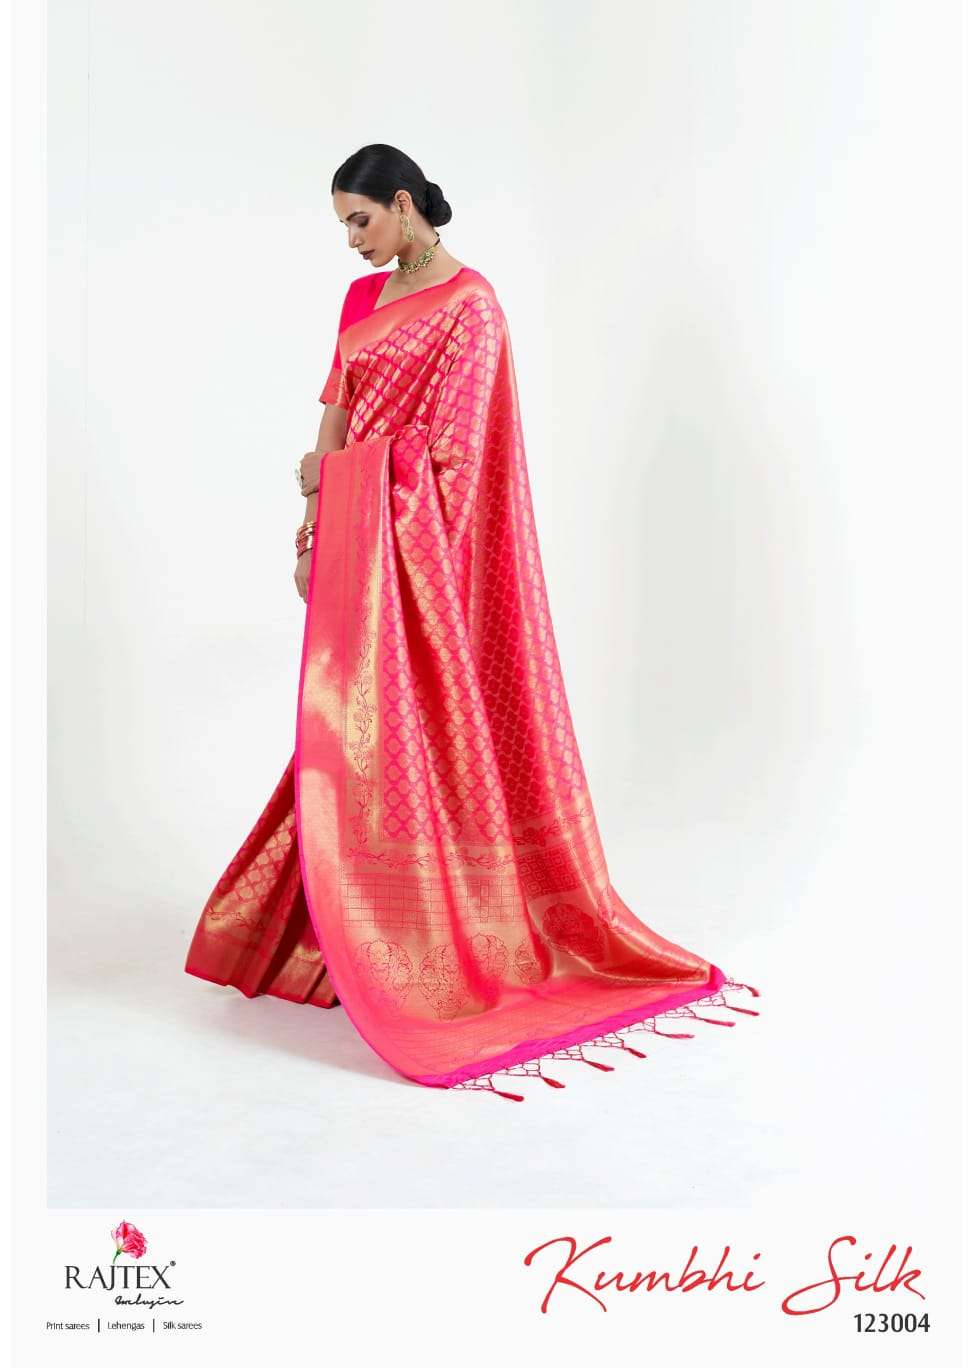 Rajtex Kumbhi Silk 123004 Handloom Weaving Silk Saree Collection Wholesale Rtae in Surat - Saidharanx